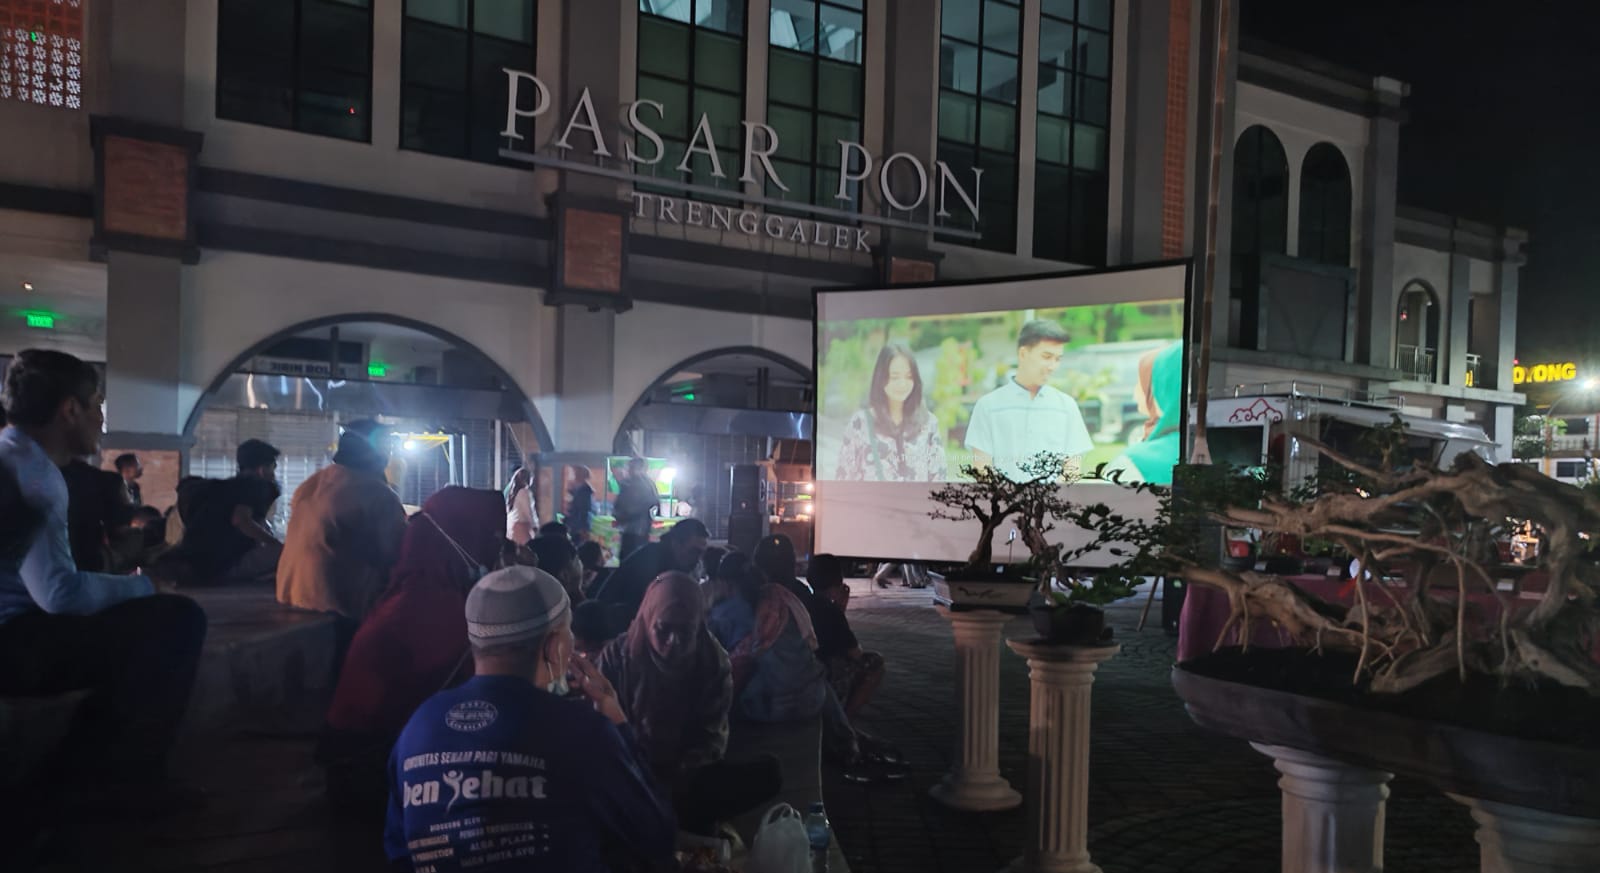 Warga nonton film di Pasar Pon Trenggalek